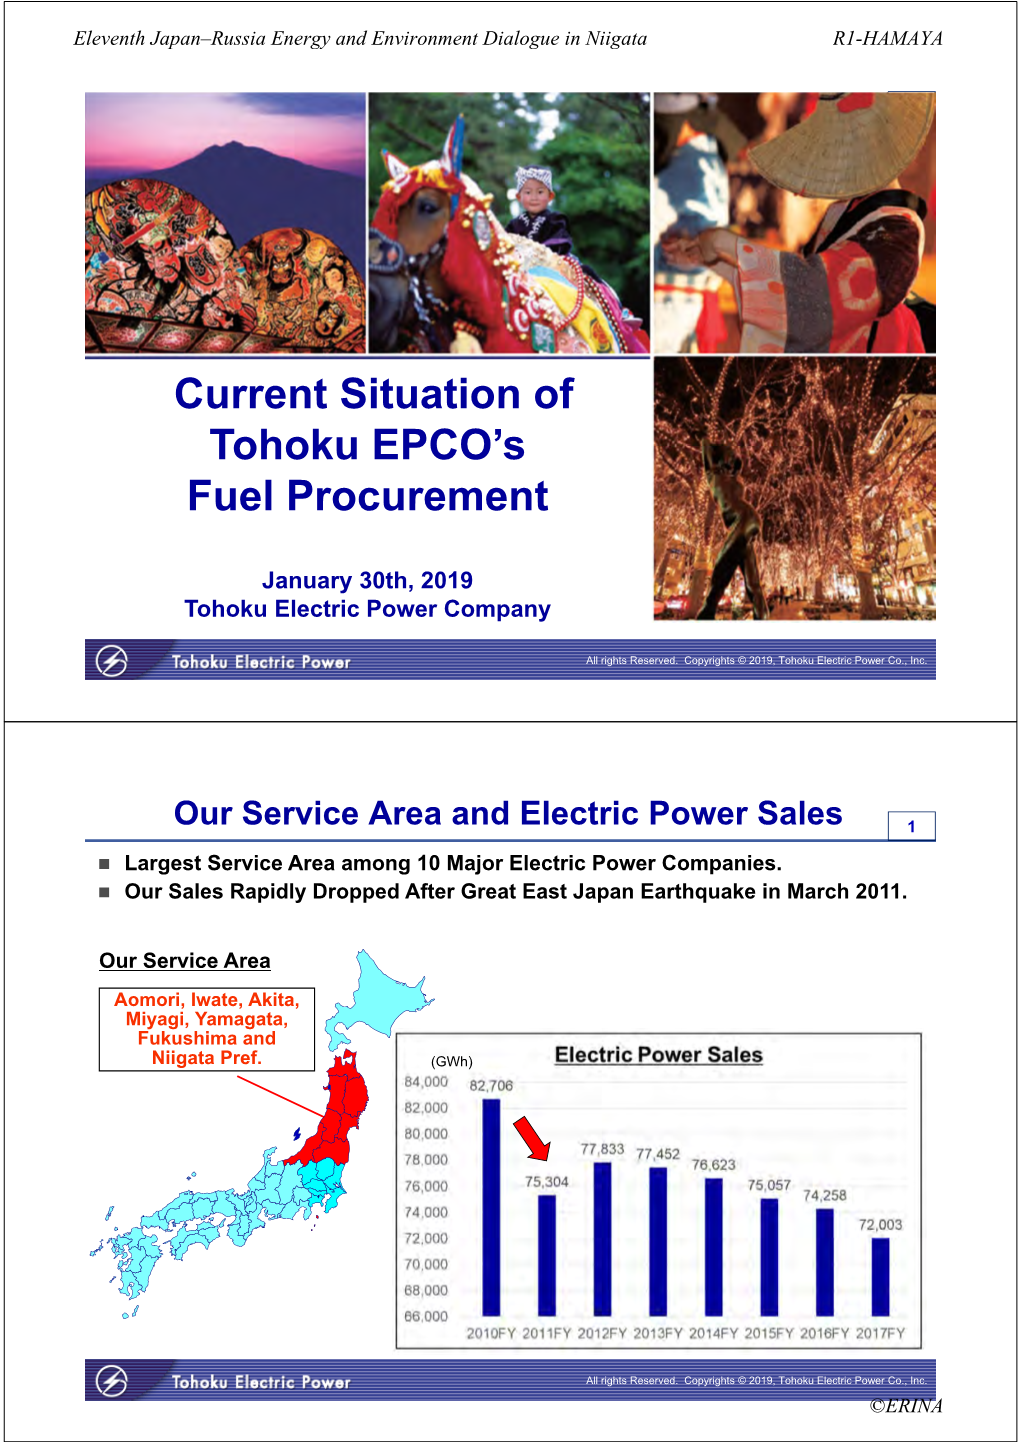 Current Situation of Tohoku EPCO's Fuel Procurement